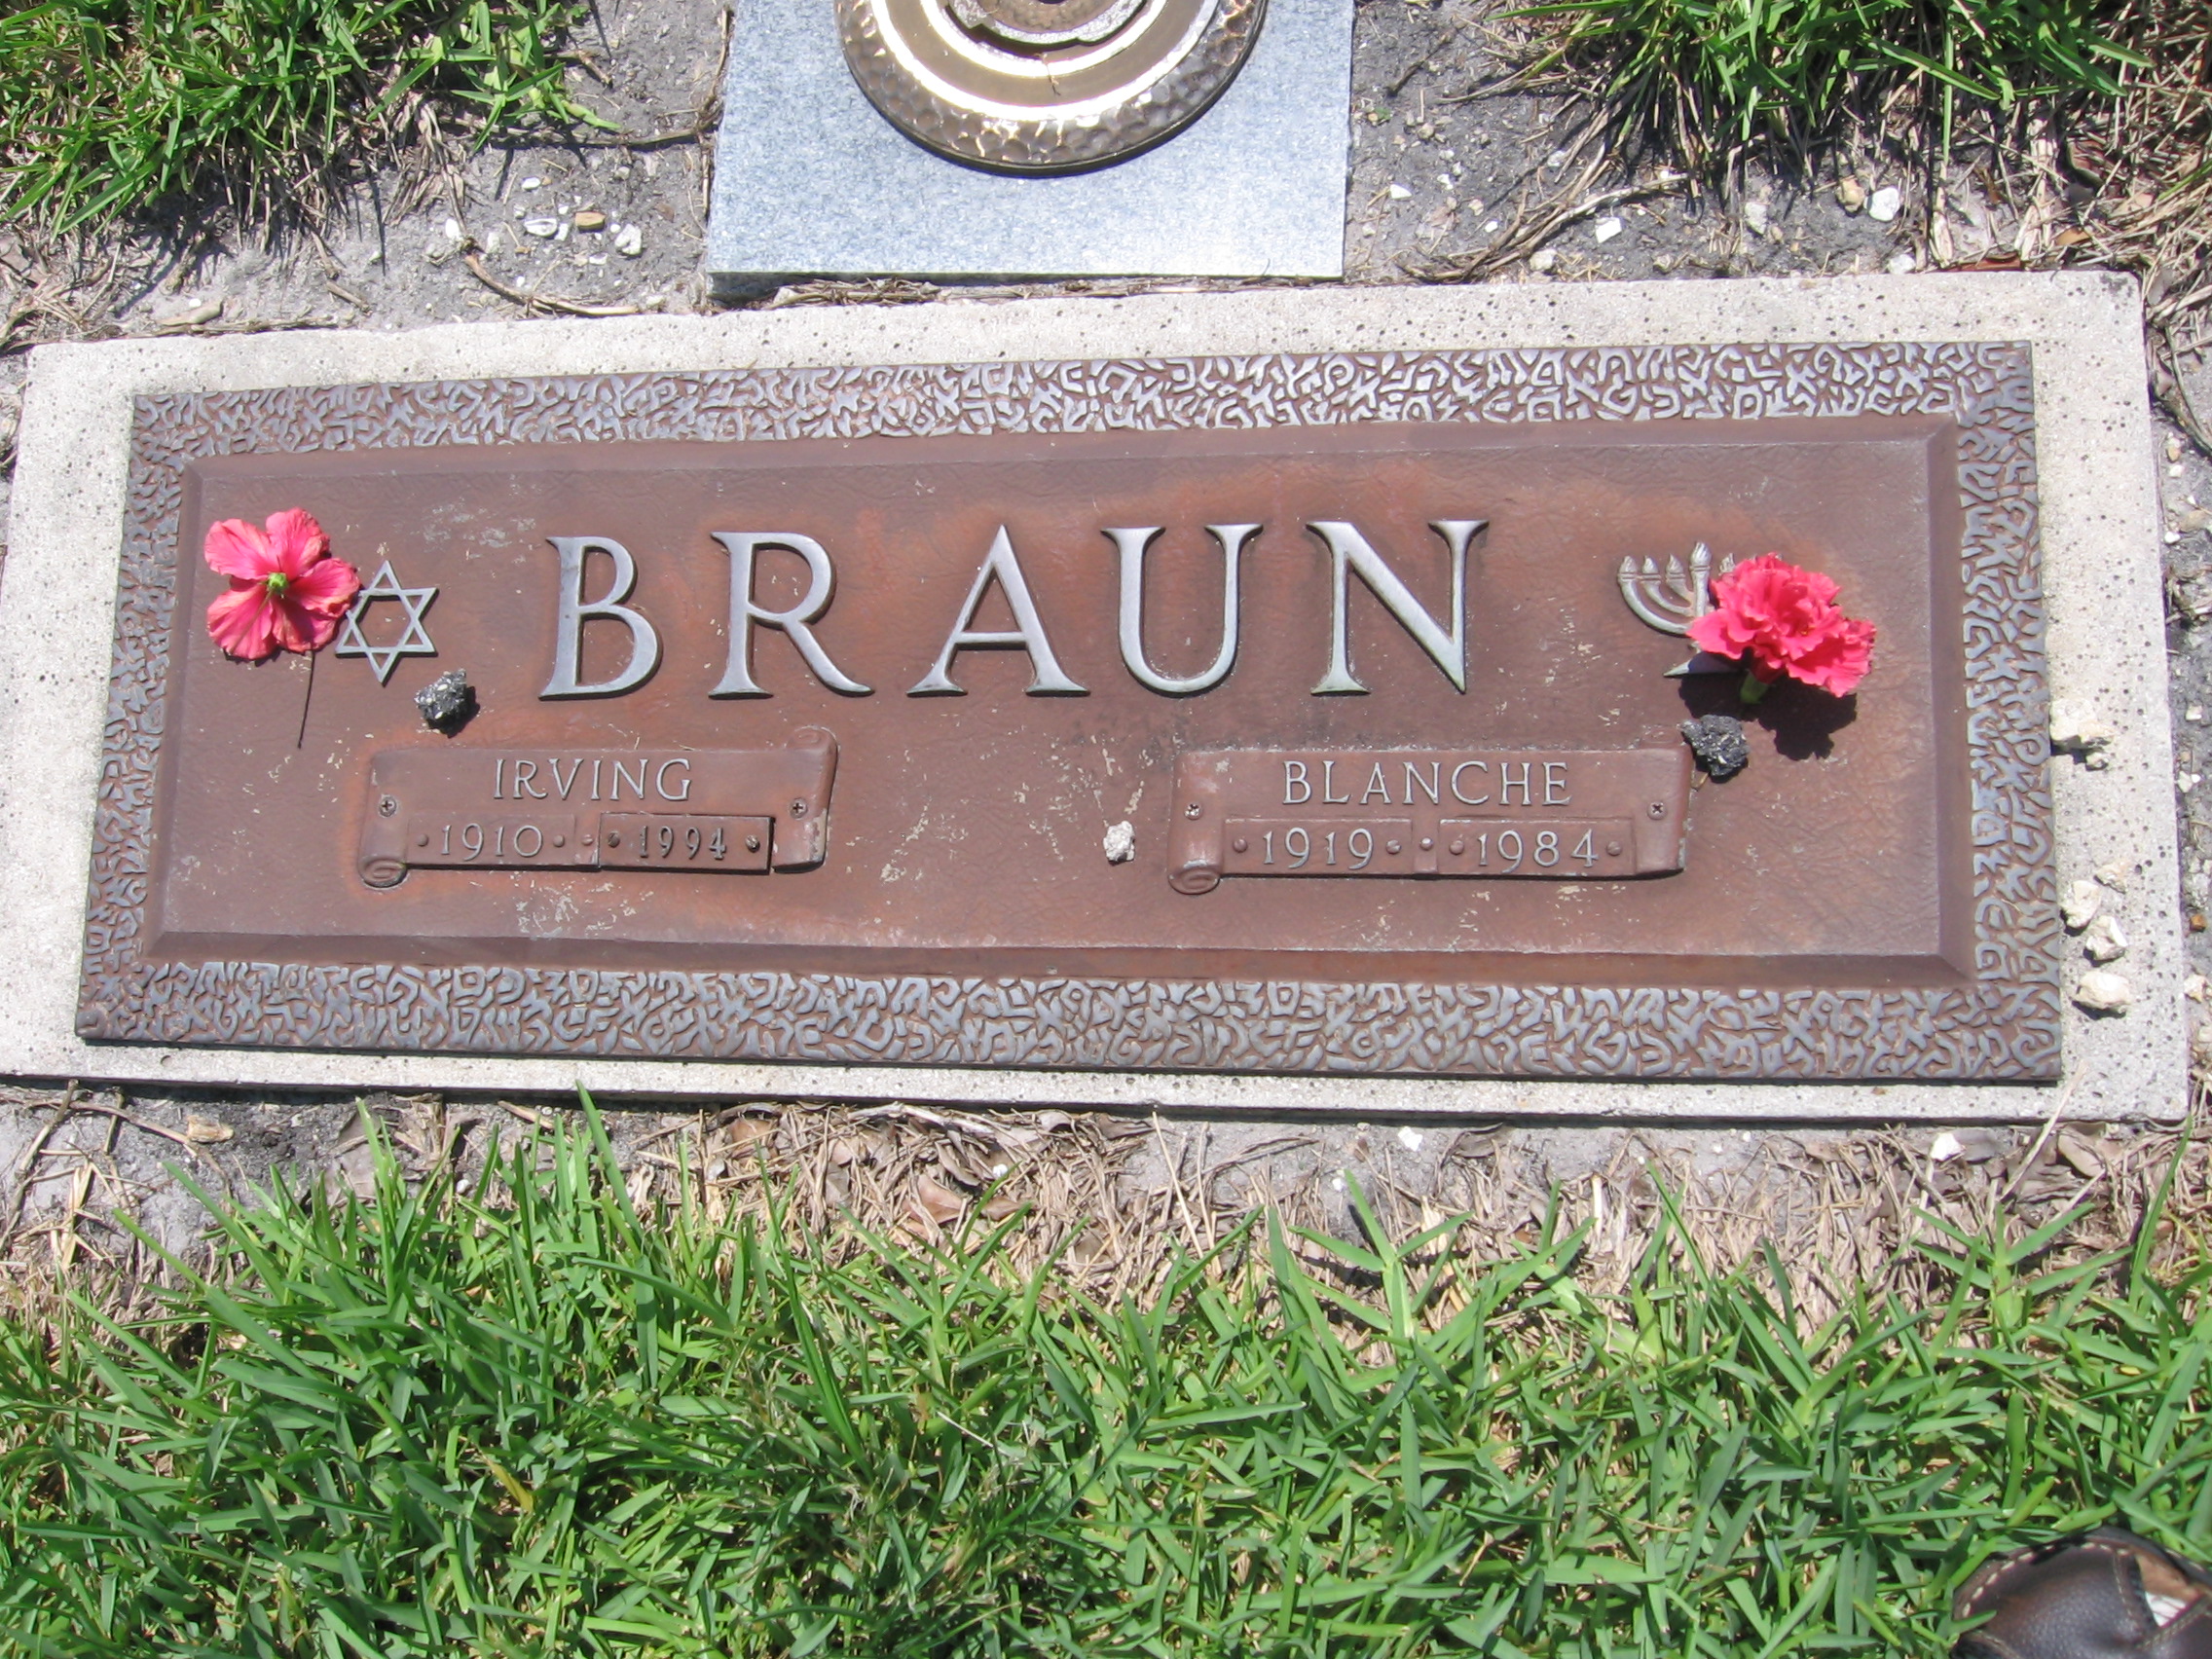 Irving Braun